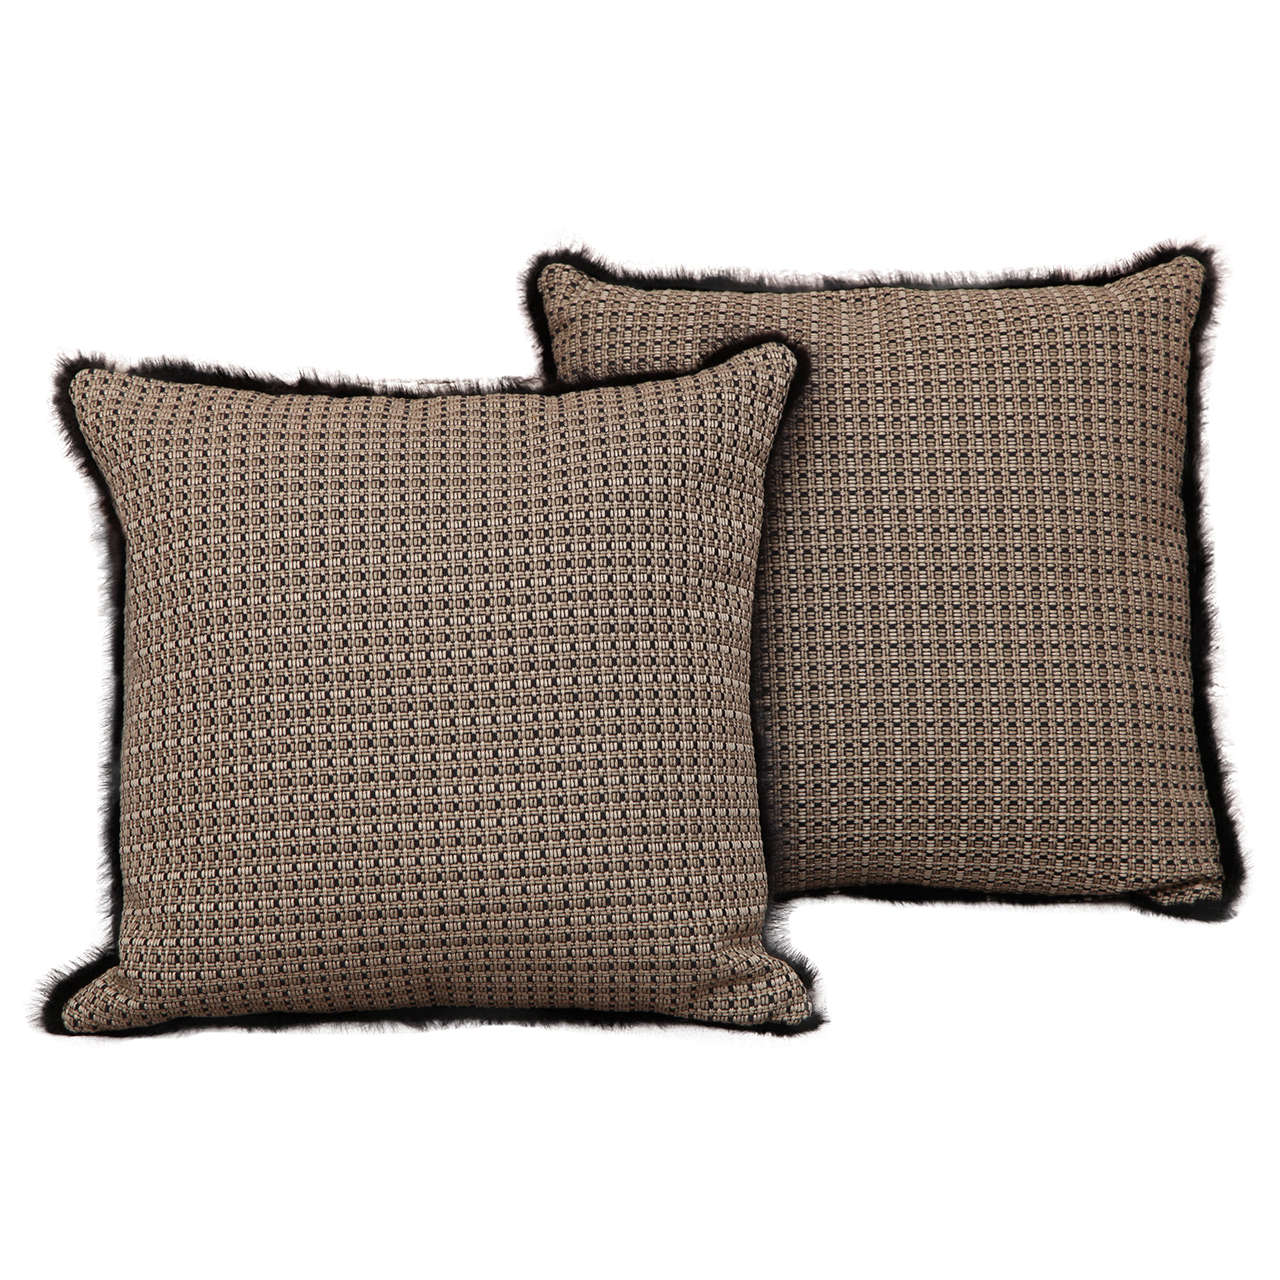 British Black Fur Square Pair of Pillows For Sale